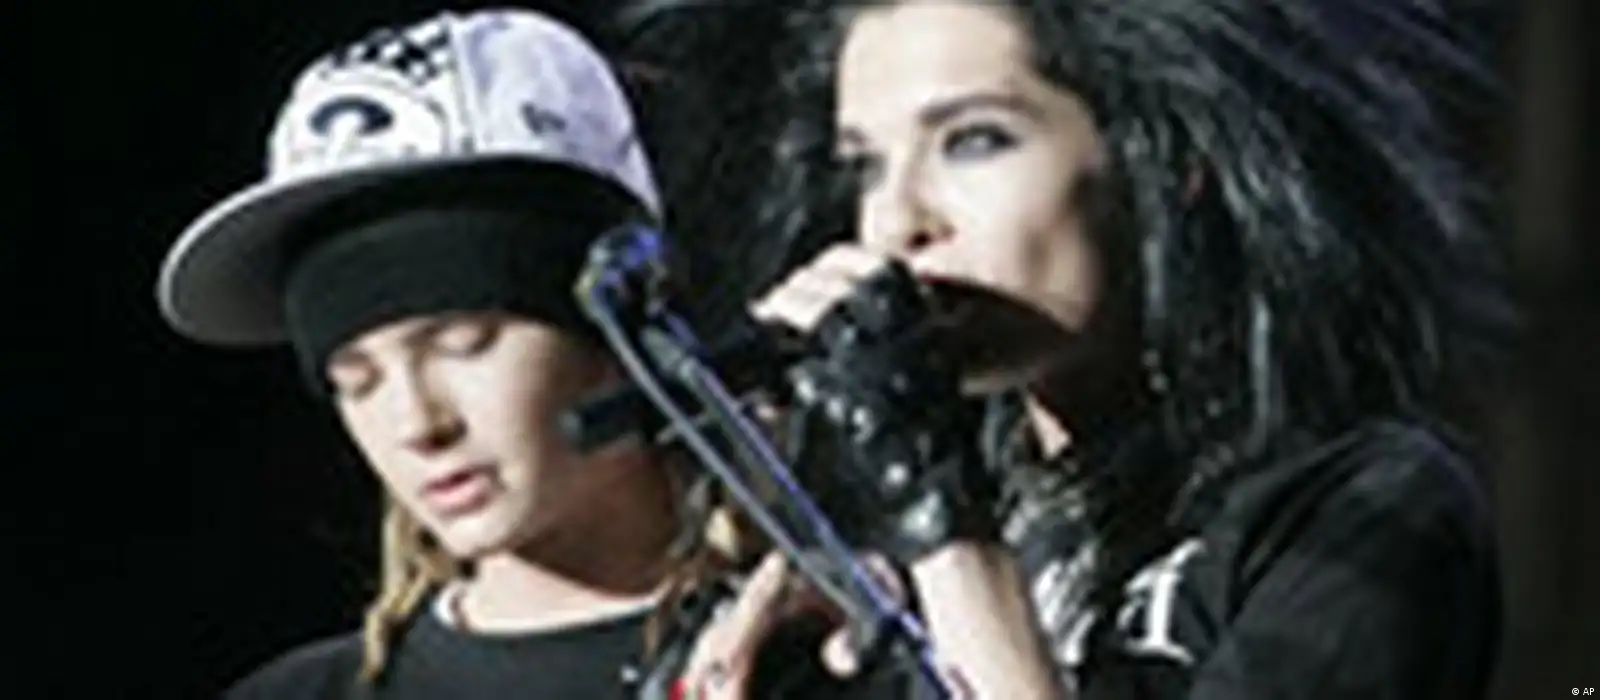 Tokio Hotel comeback – DW – 03/25/2015